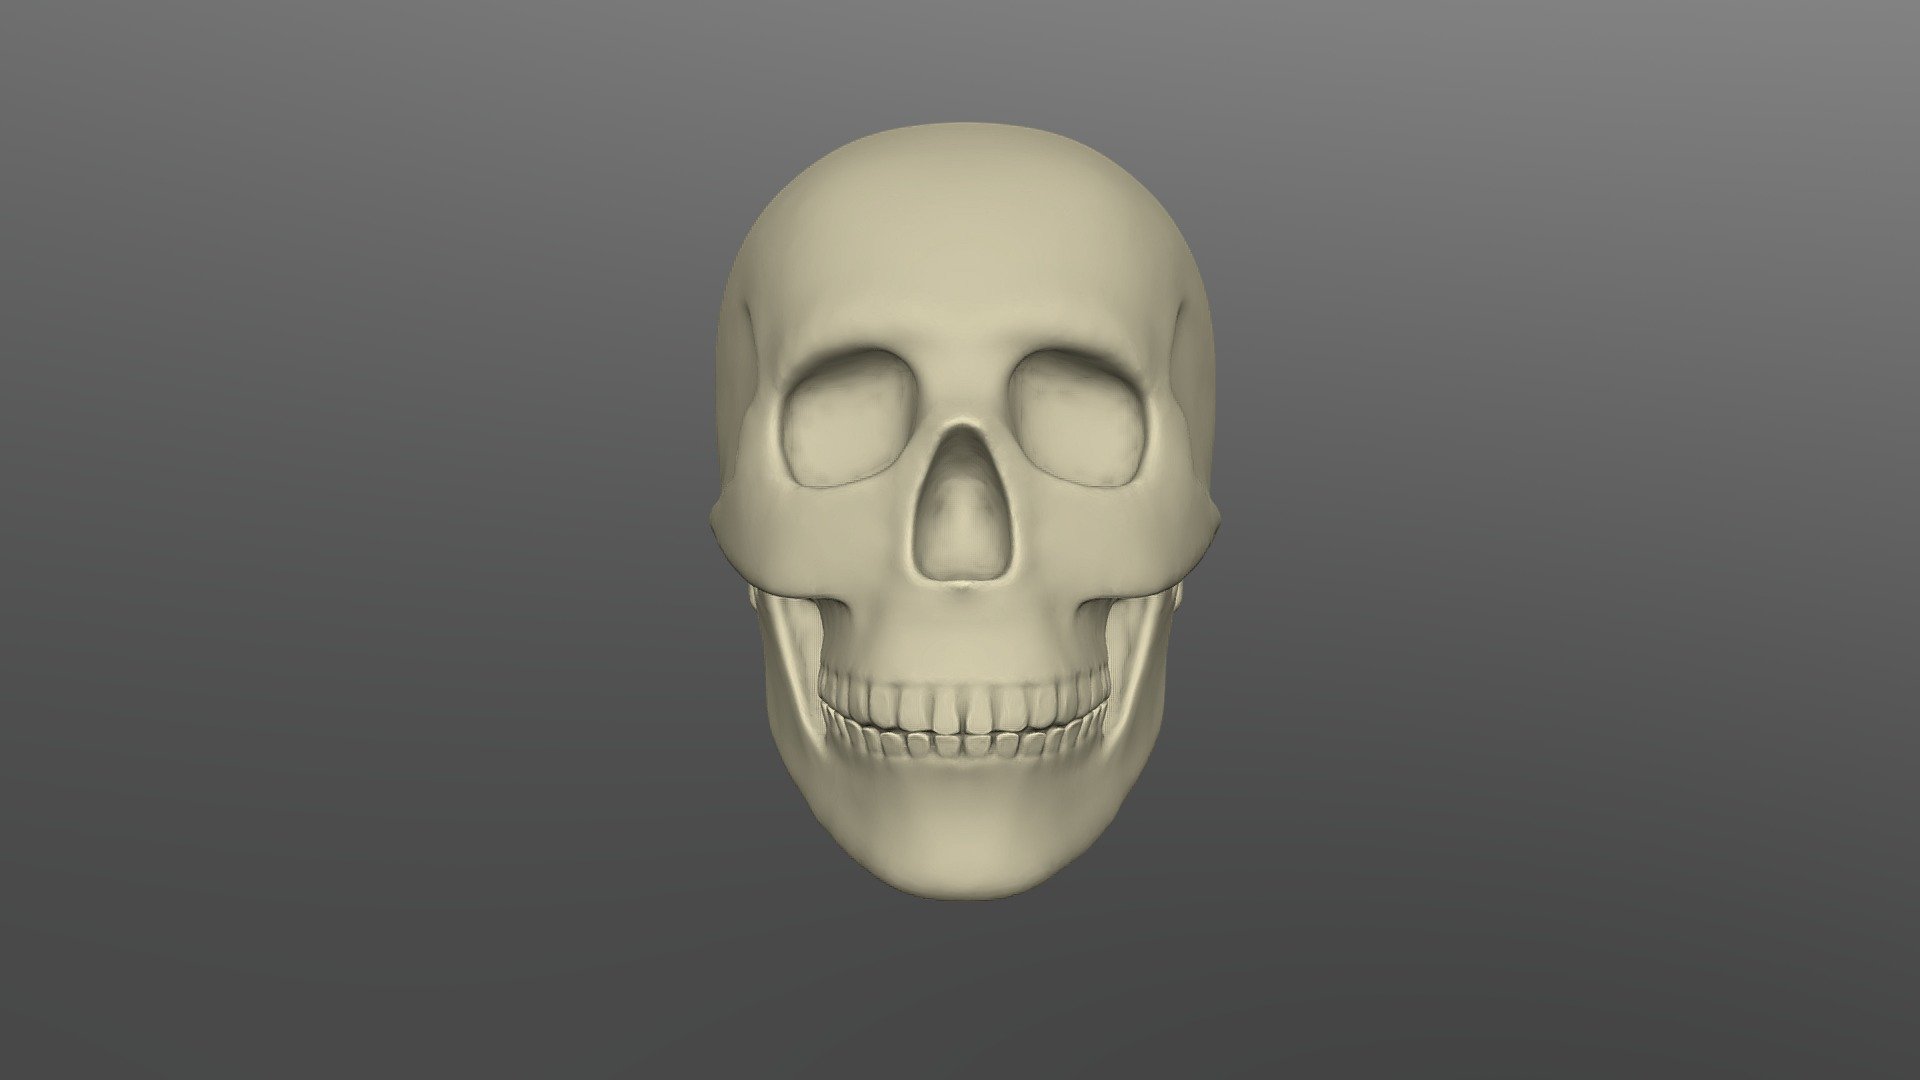 Skull Download Free 3d Model By Fabian Espinosa Fabianespinosa 4b232a3 Sketchfab 1011